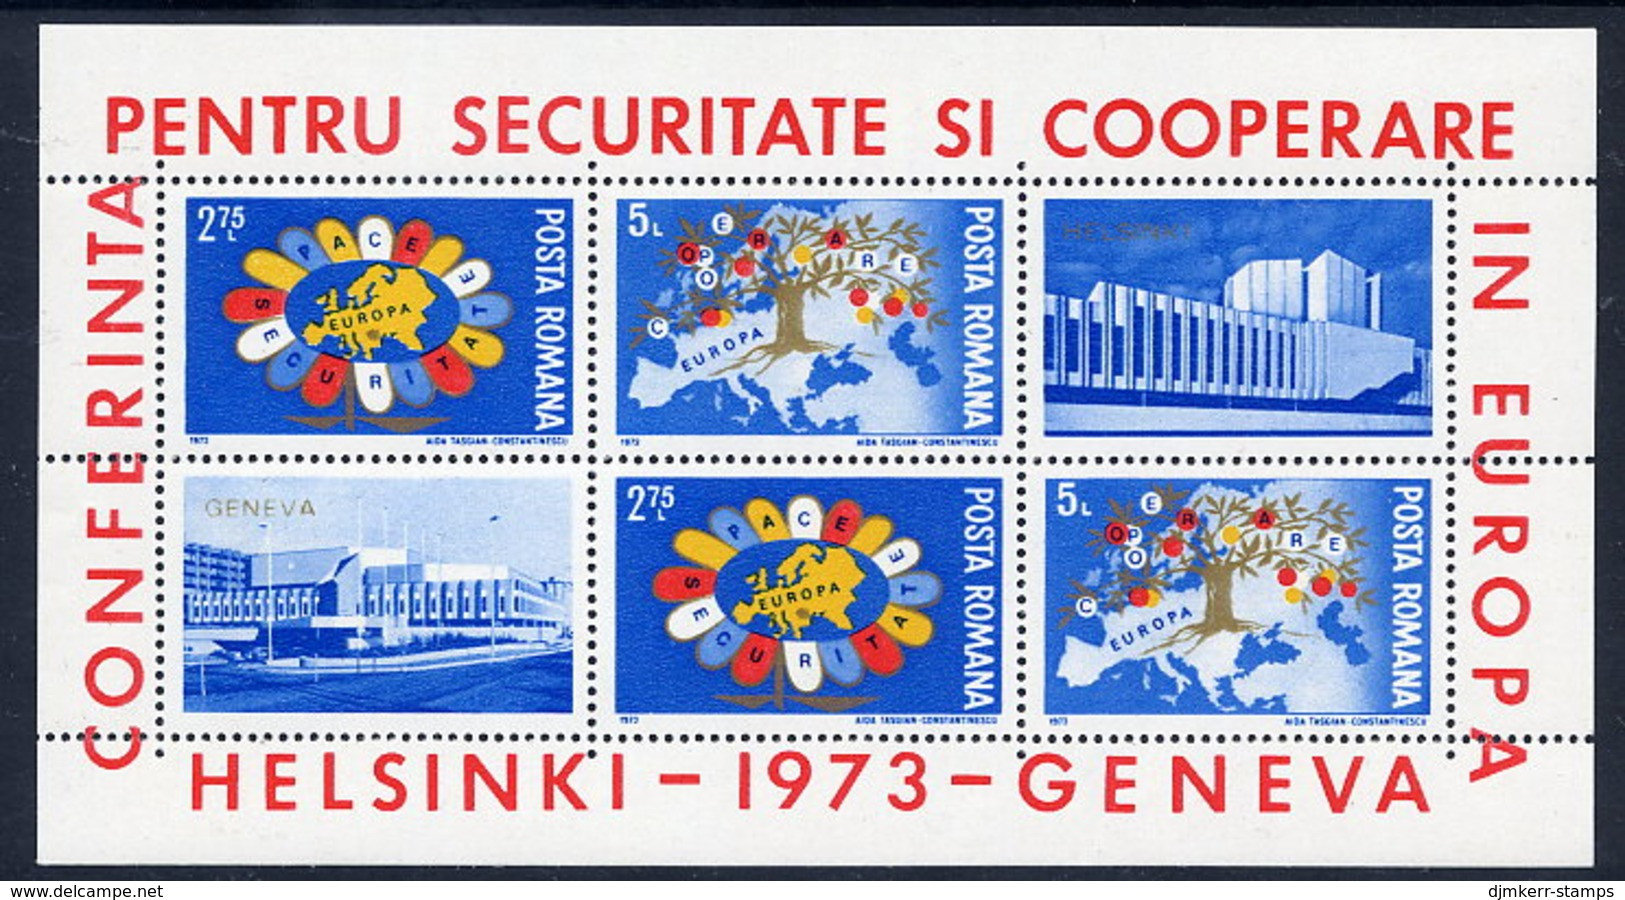 ROMANIA 1973 European Security Conference Block MNH / **.  Michel Block 108 - Blocks & Kleinbögen